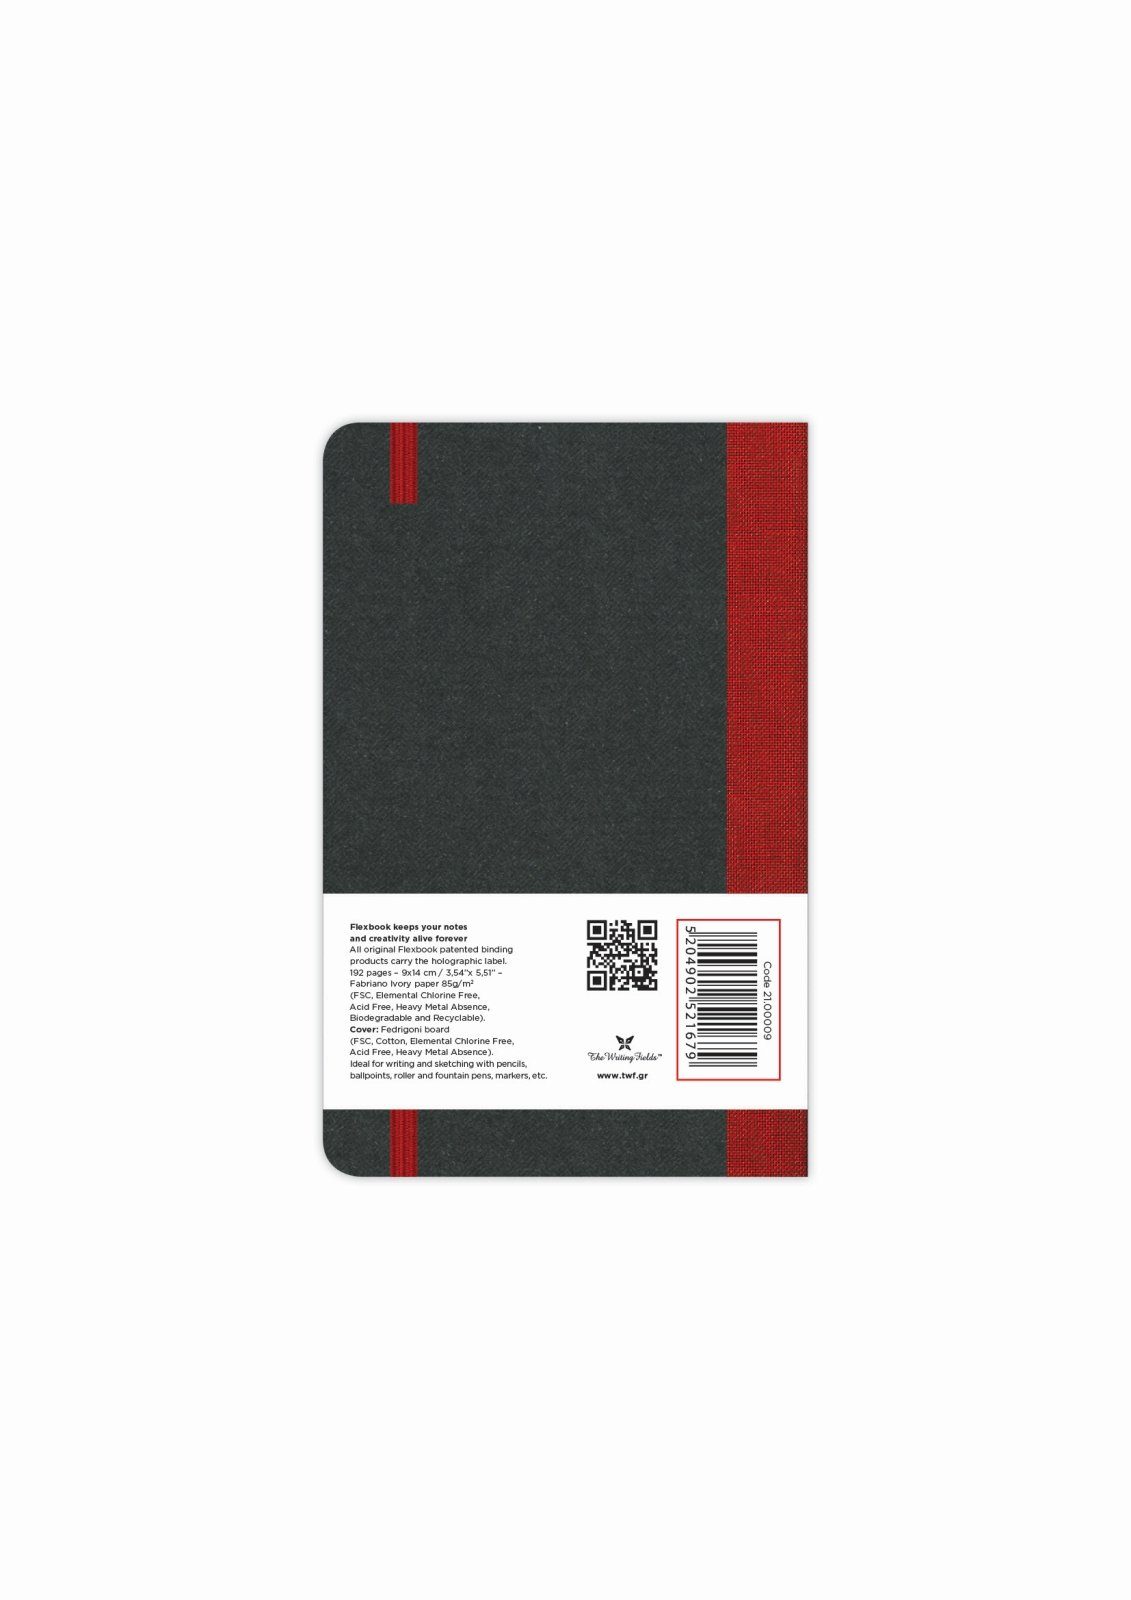 * Flexbook Notizbuch / Rot Notizbuch Elastikband blanko/linierte verschied 9 Flexbook / Blanko Globel 14 cm Seiten